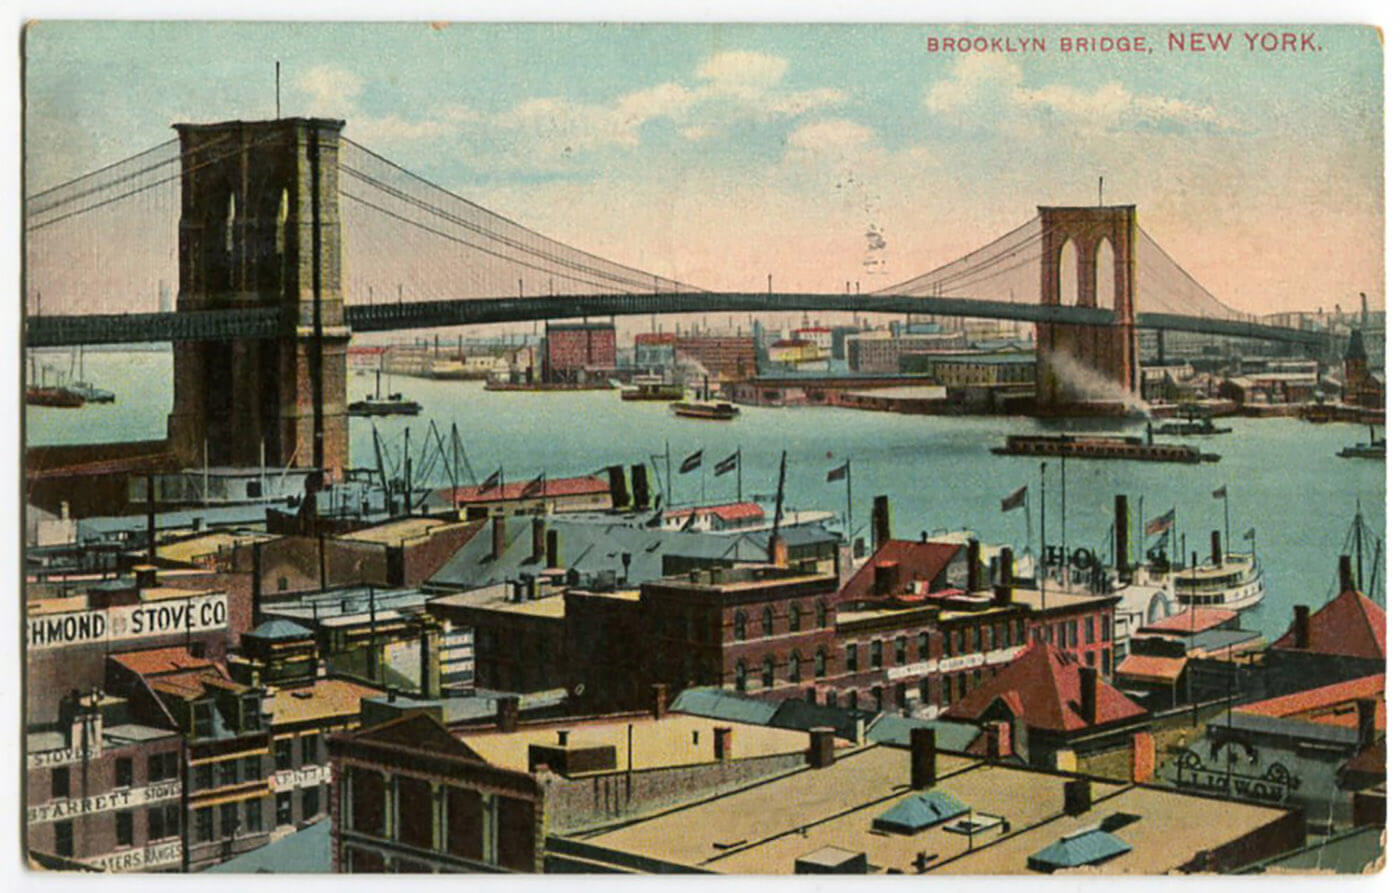 Postcard showing docks near Brooklyn Bridge. Image via eBay